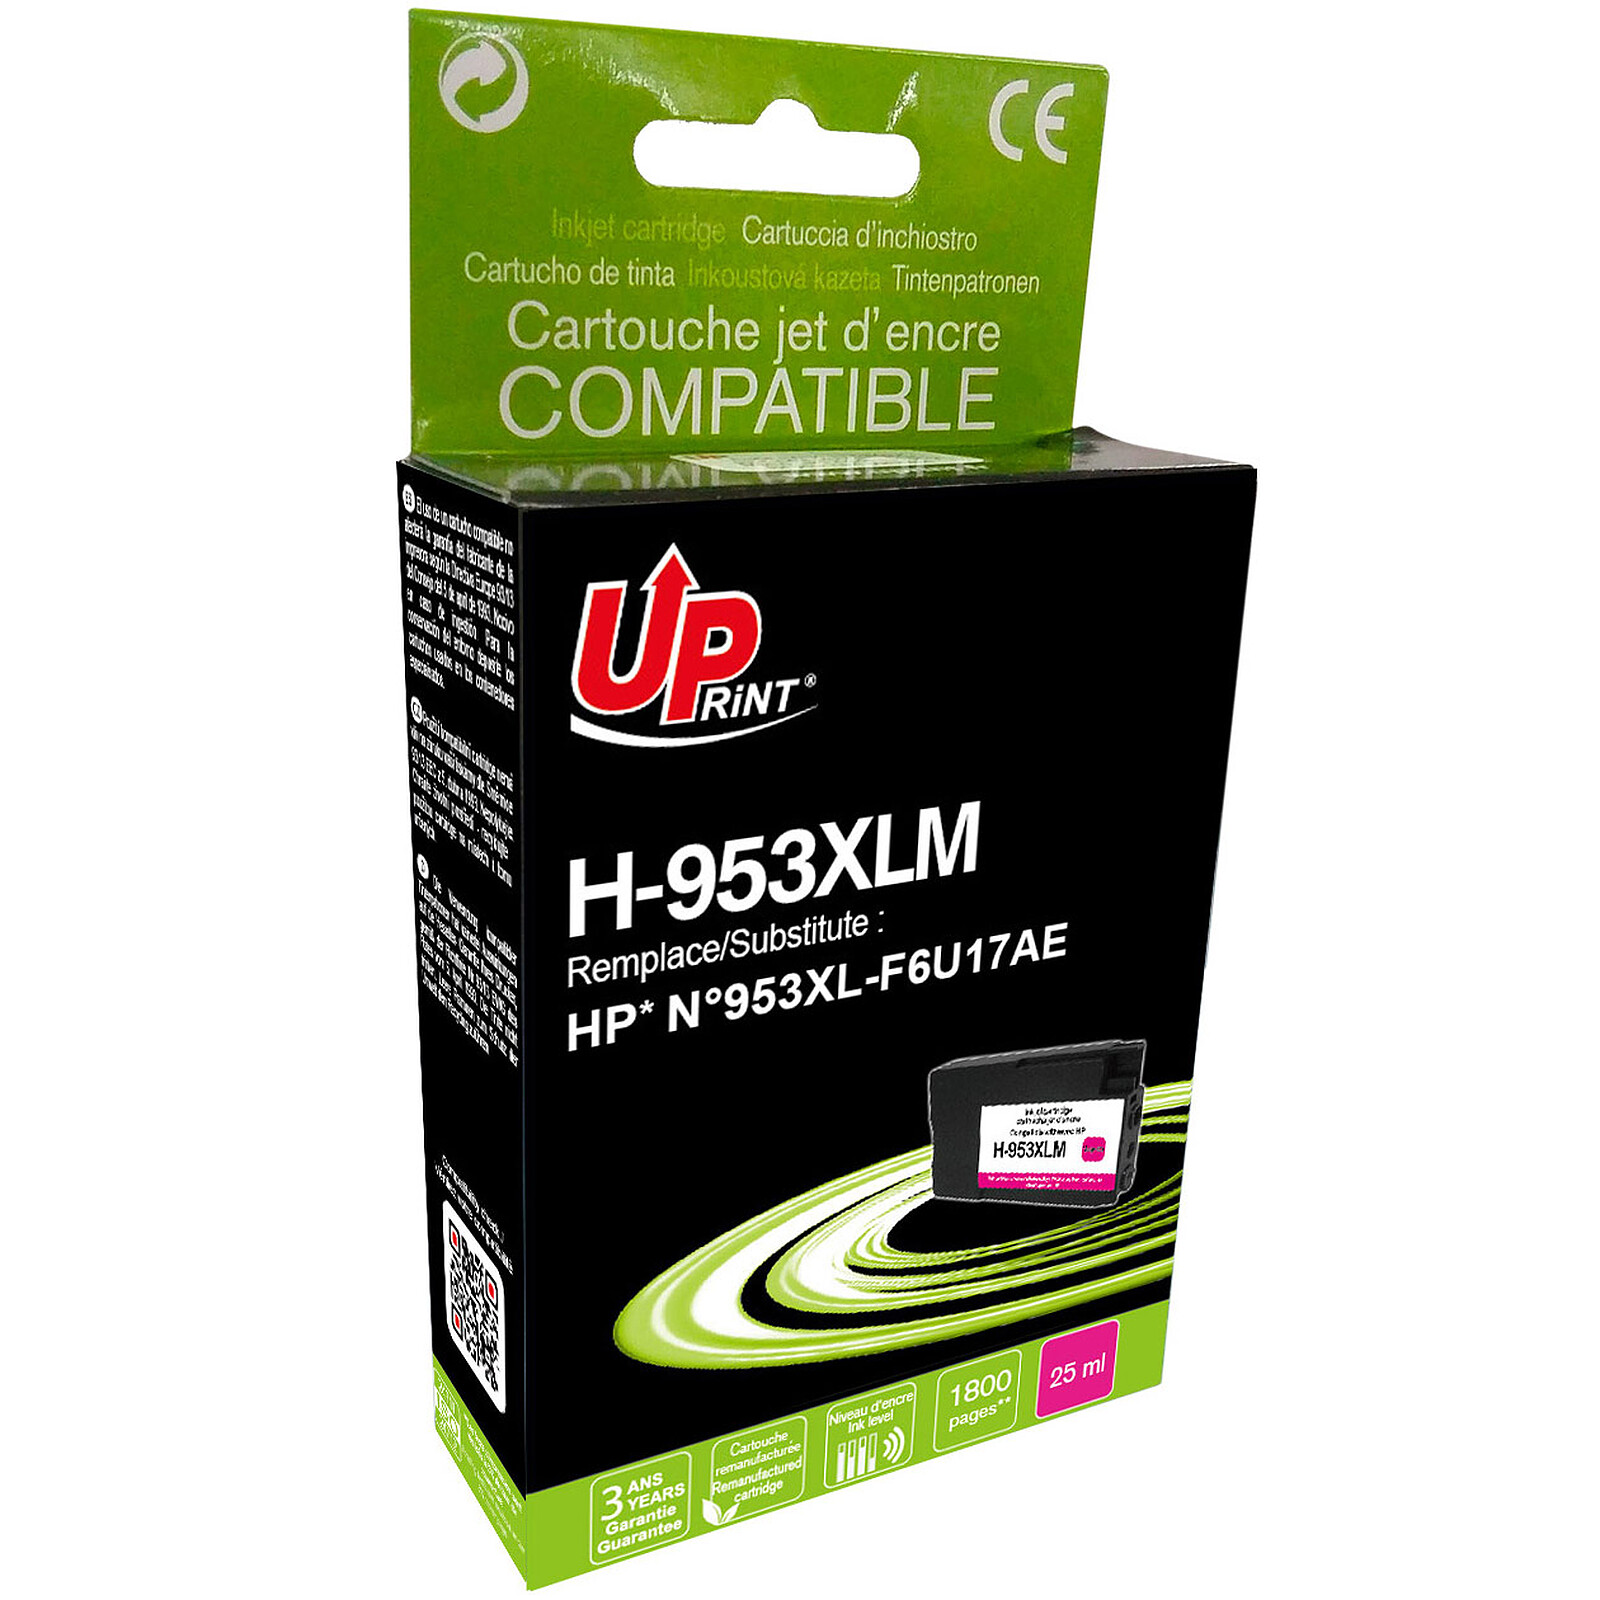 - H-953XL cartridge Printer LDLC - Moley UPrint Magenta Holy |